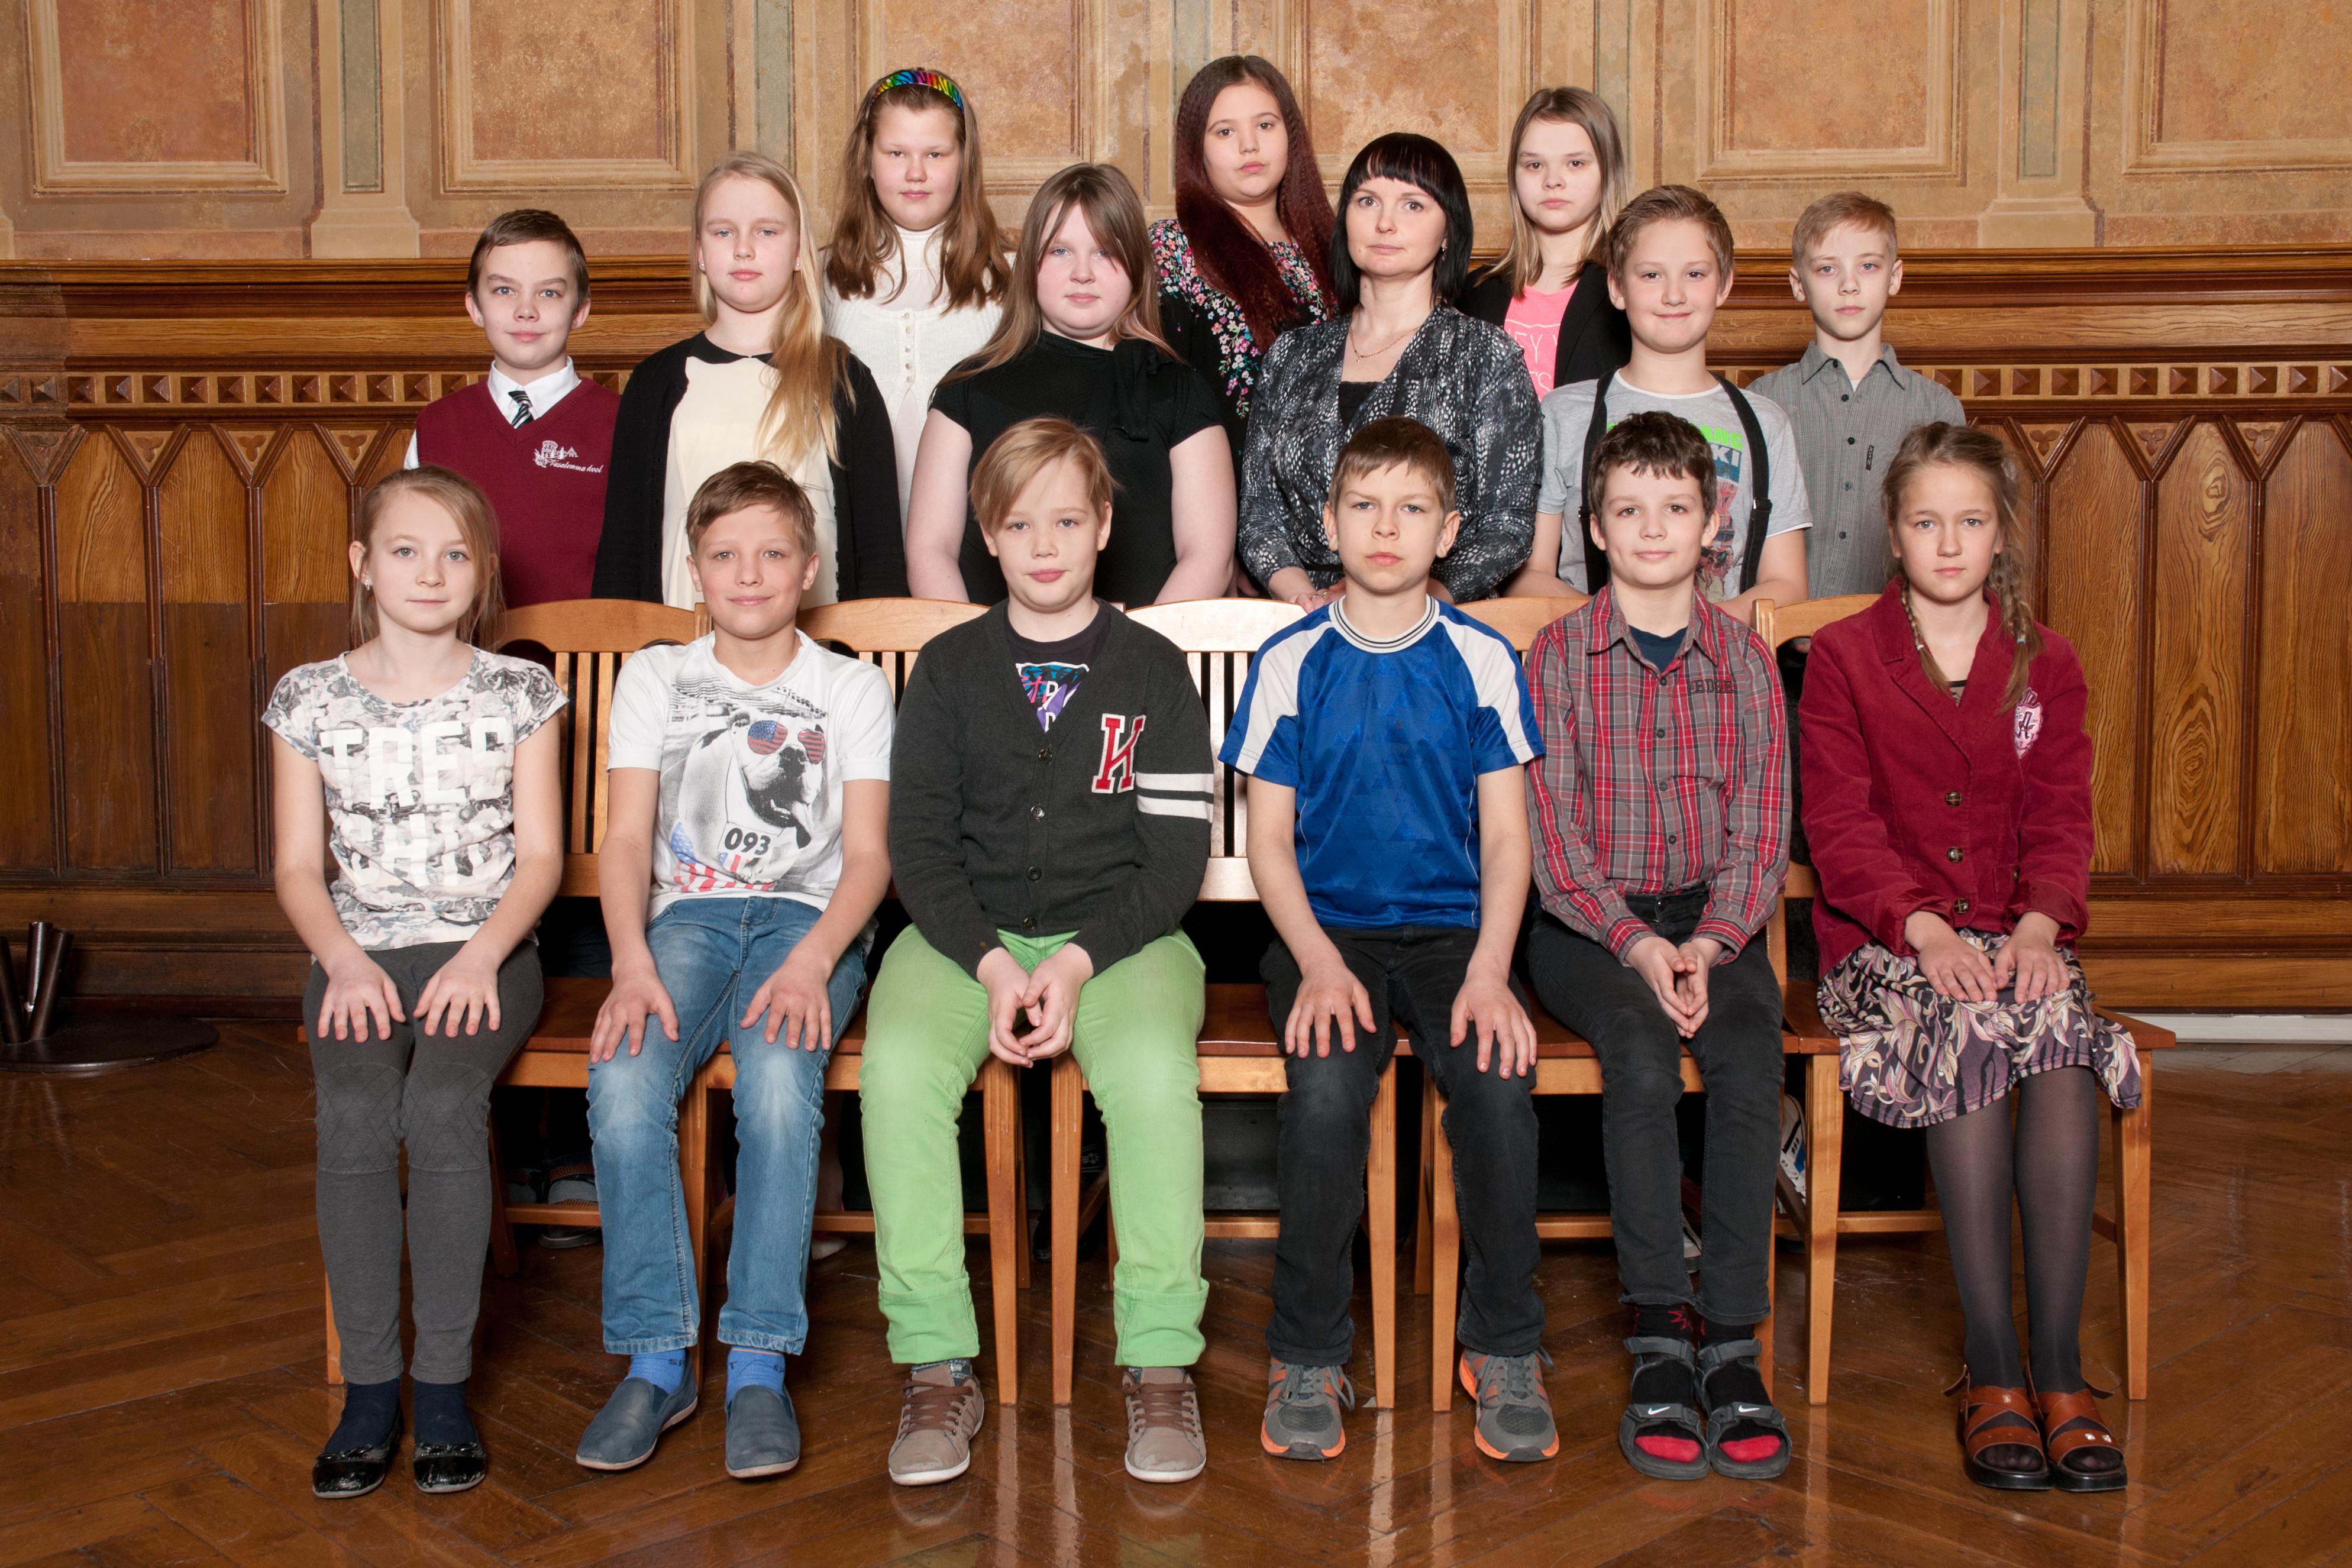 Https vprklass ru 5 klass. 5 Класс фото. 5 Класс фото для группы. 5 А класс мальчики вс девочки.